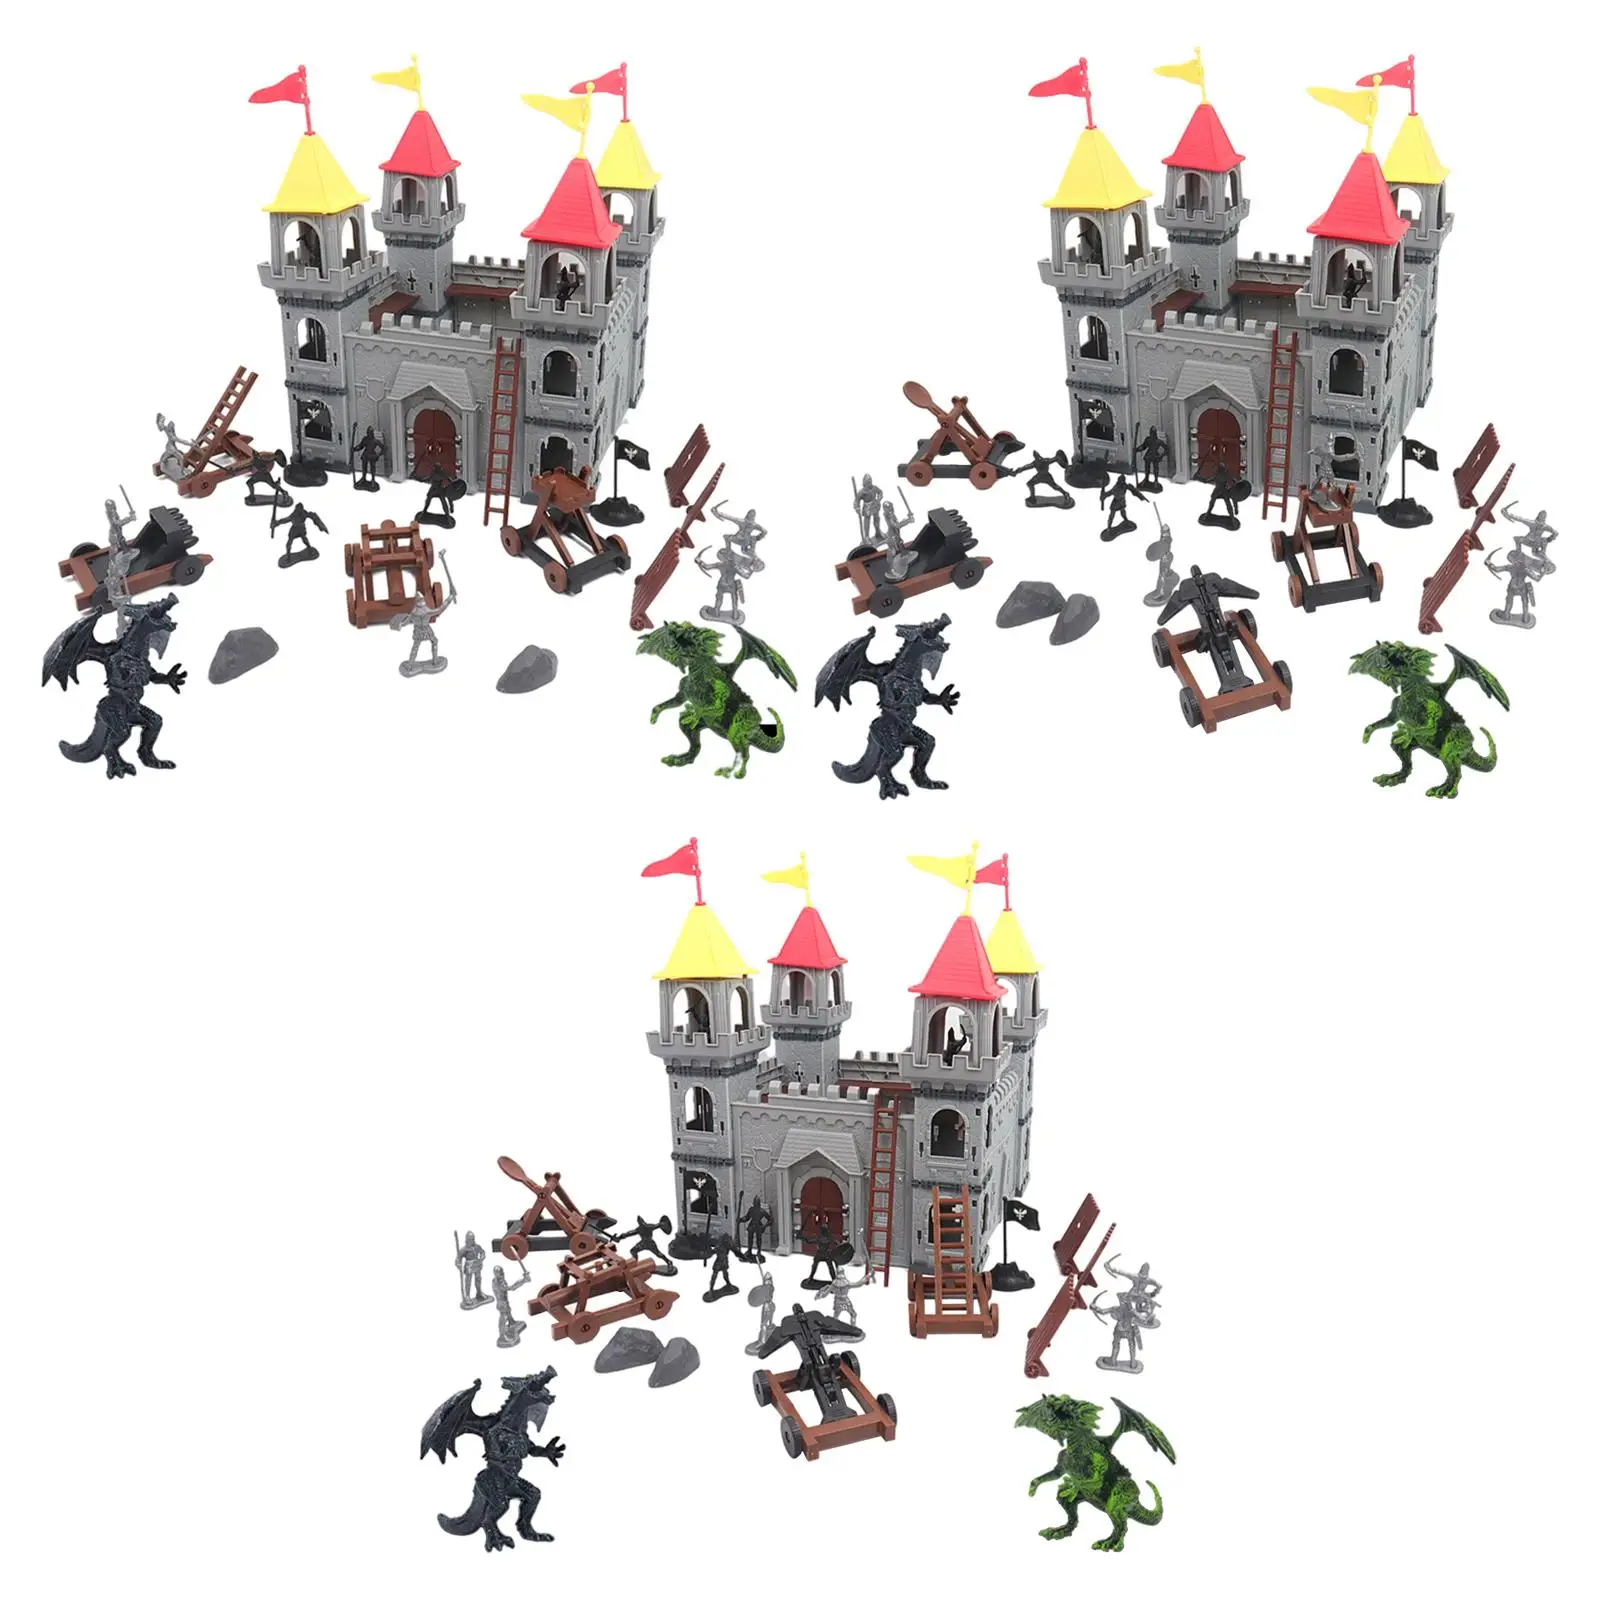  Men Battle Playset (19pcs) - Deluxe Toy Set Includes Soldiers, Drangons Accessories